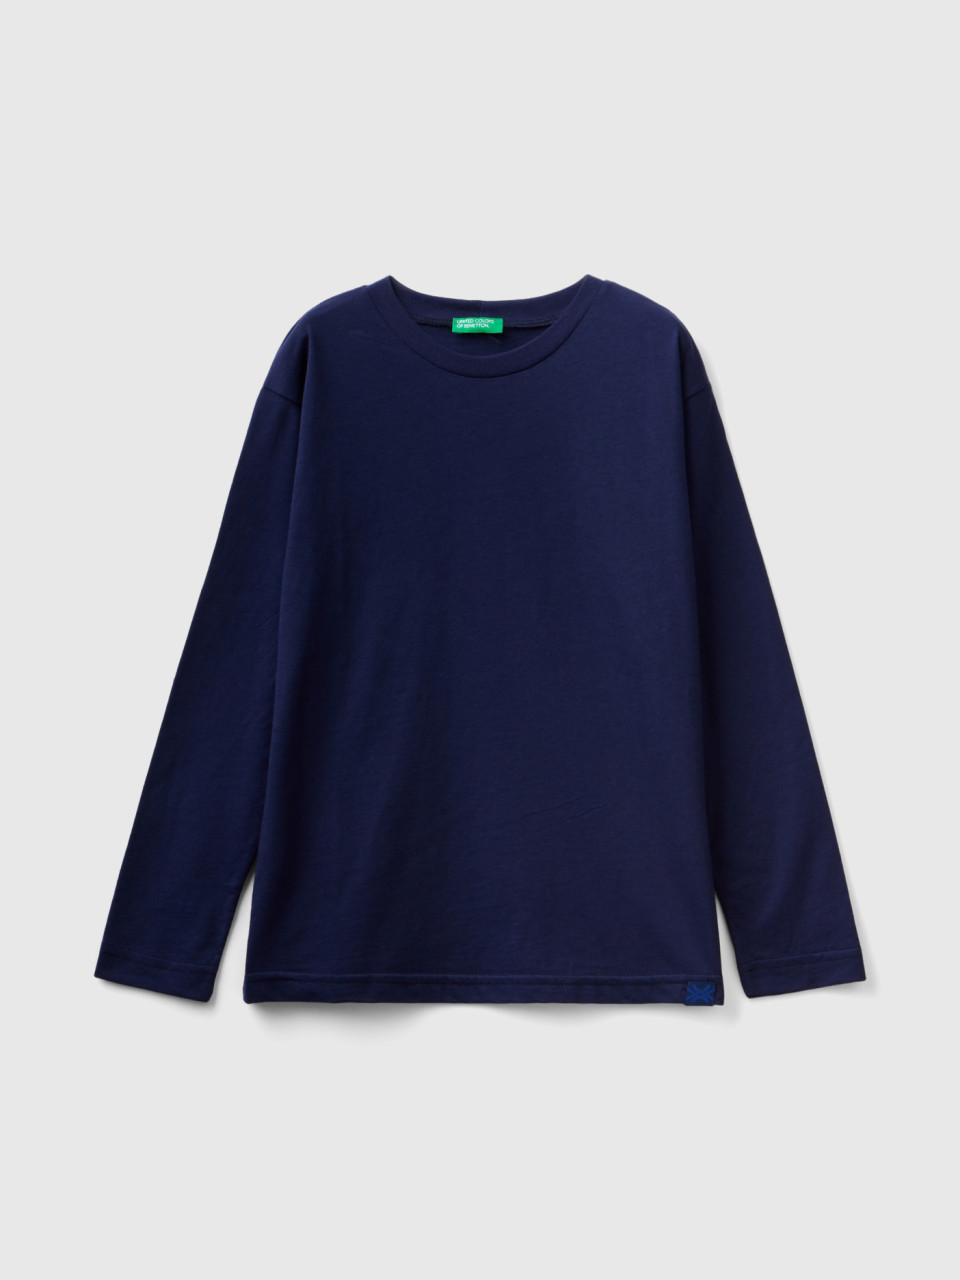 Benetton, 100% Organic Cotton Crew Neck T-shirt, Dark Blue, Kids